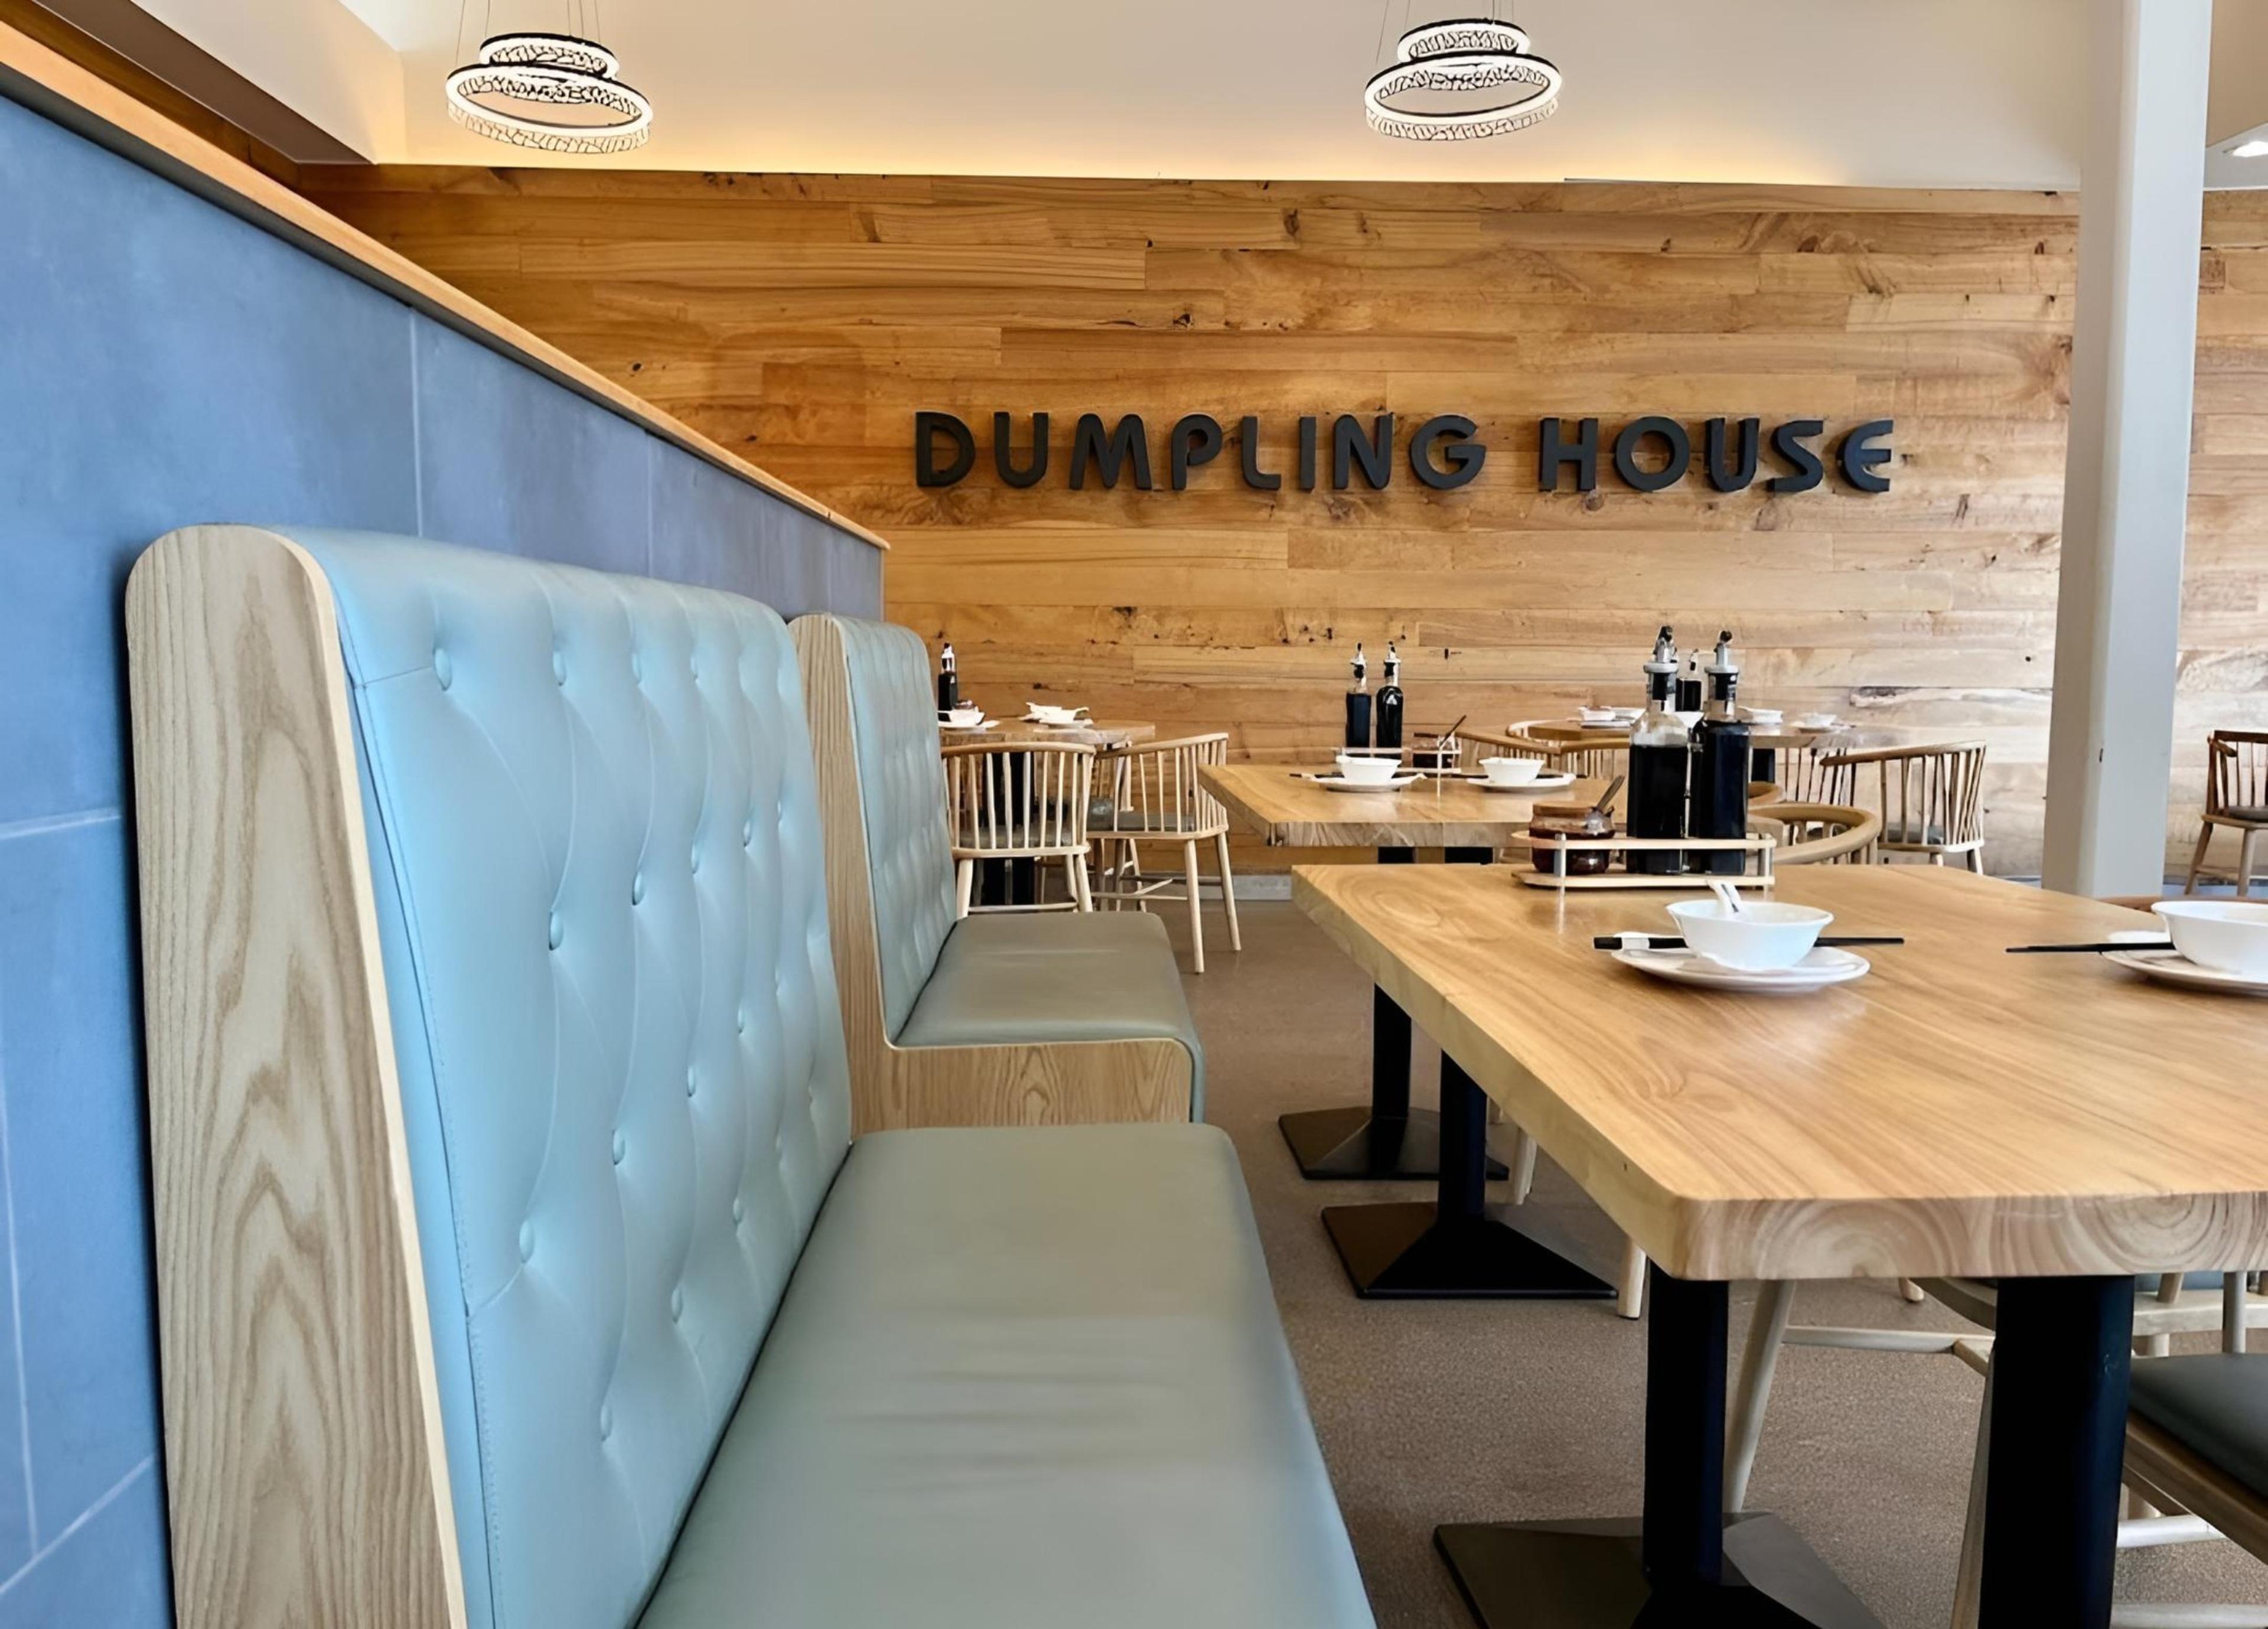 Bryan’s Dumpling House